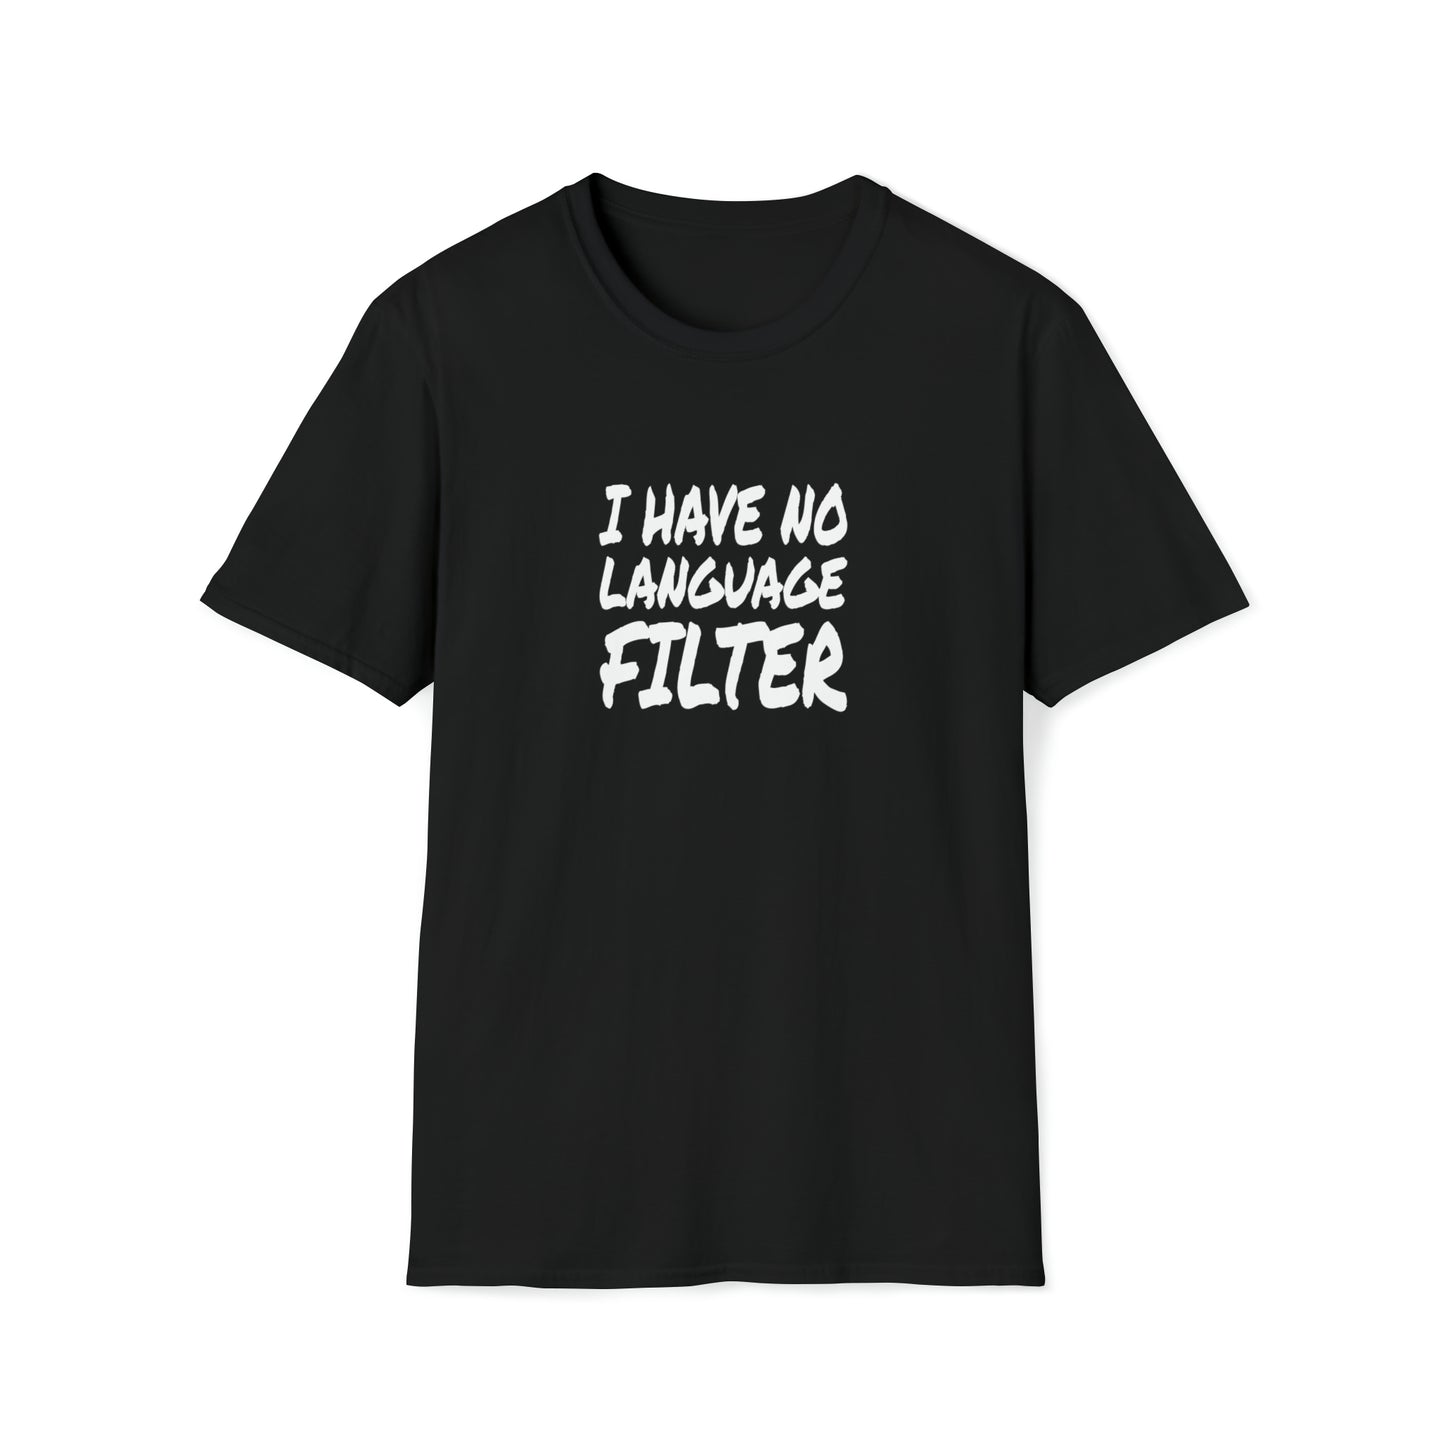 I Have no Language Filter - T-Shirt